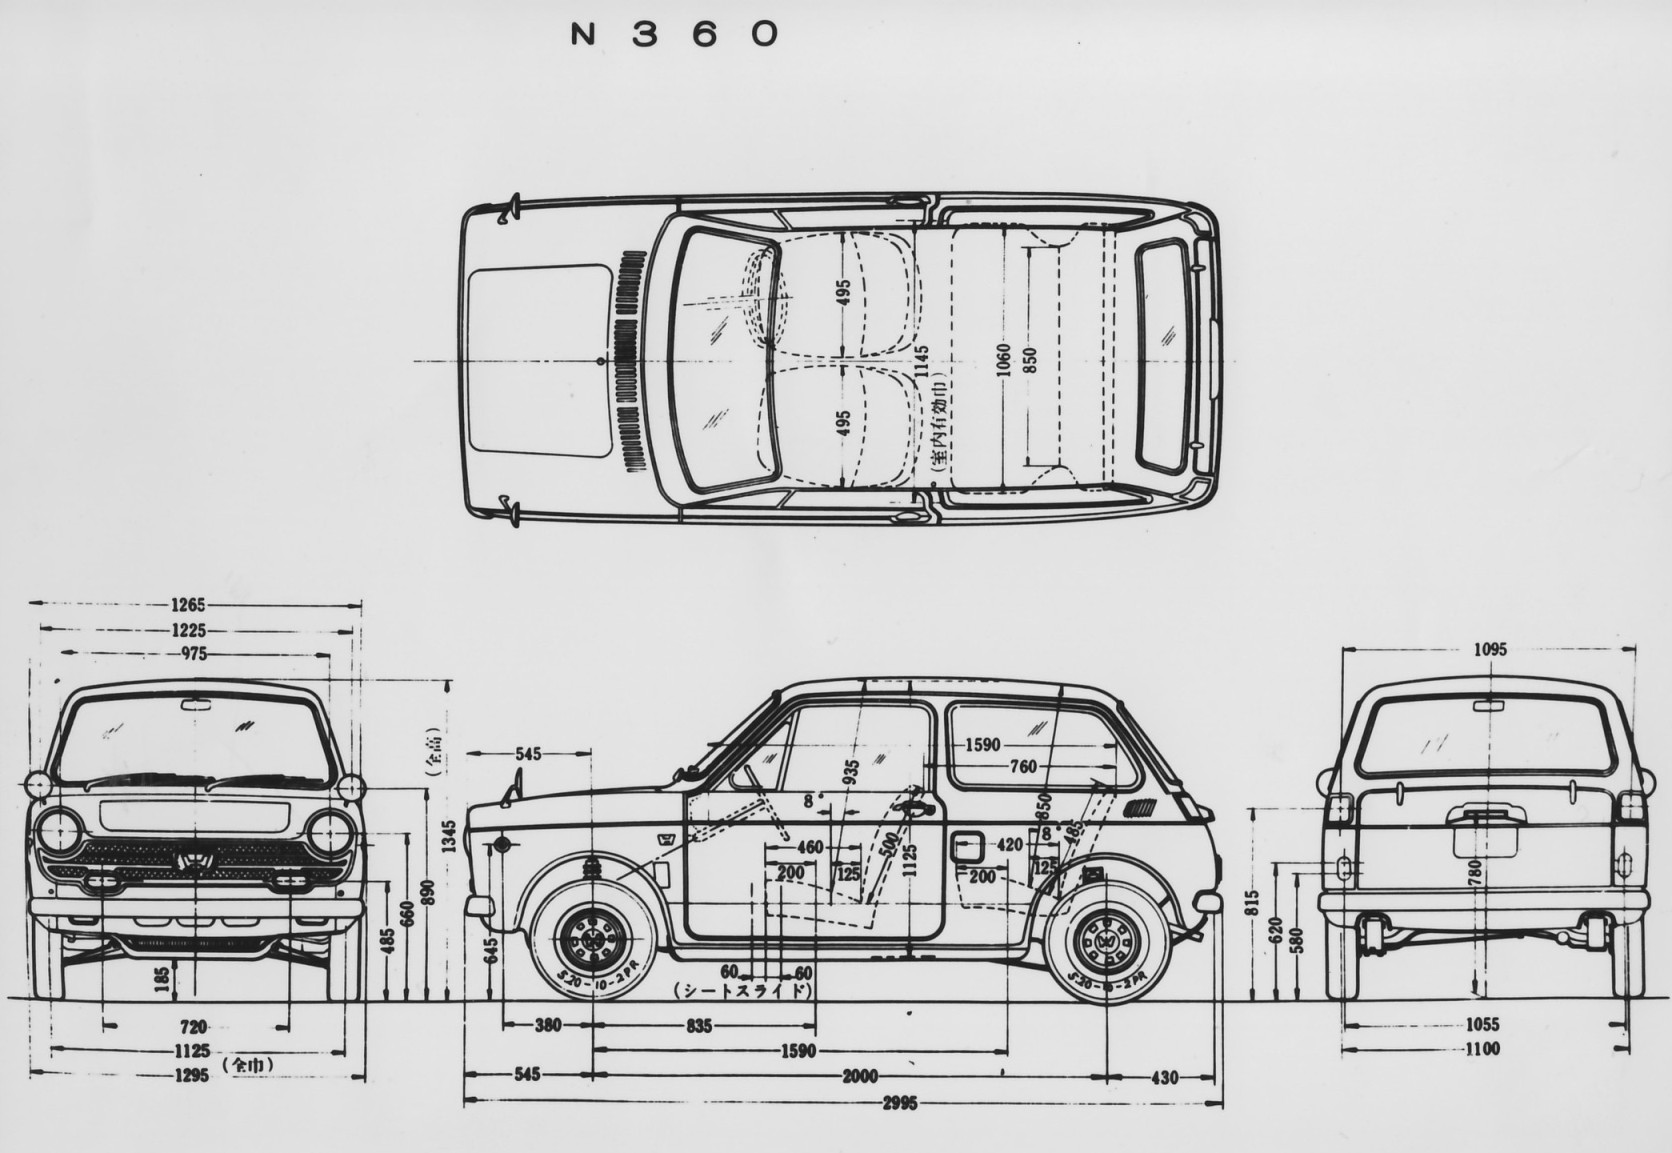 Honda N360 blueprint